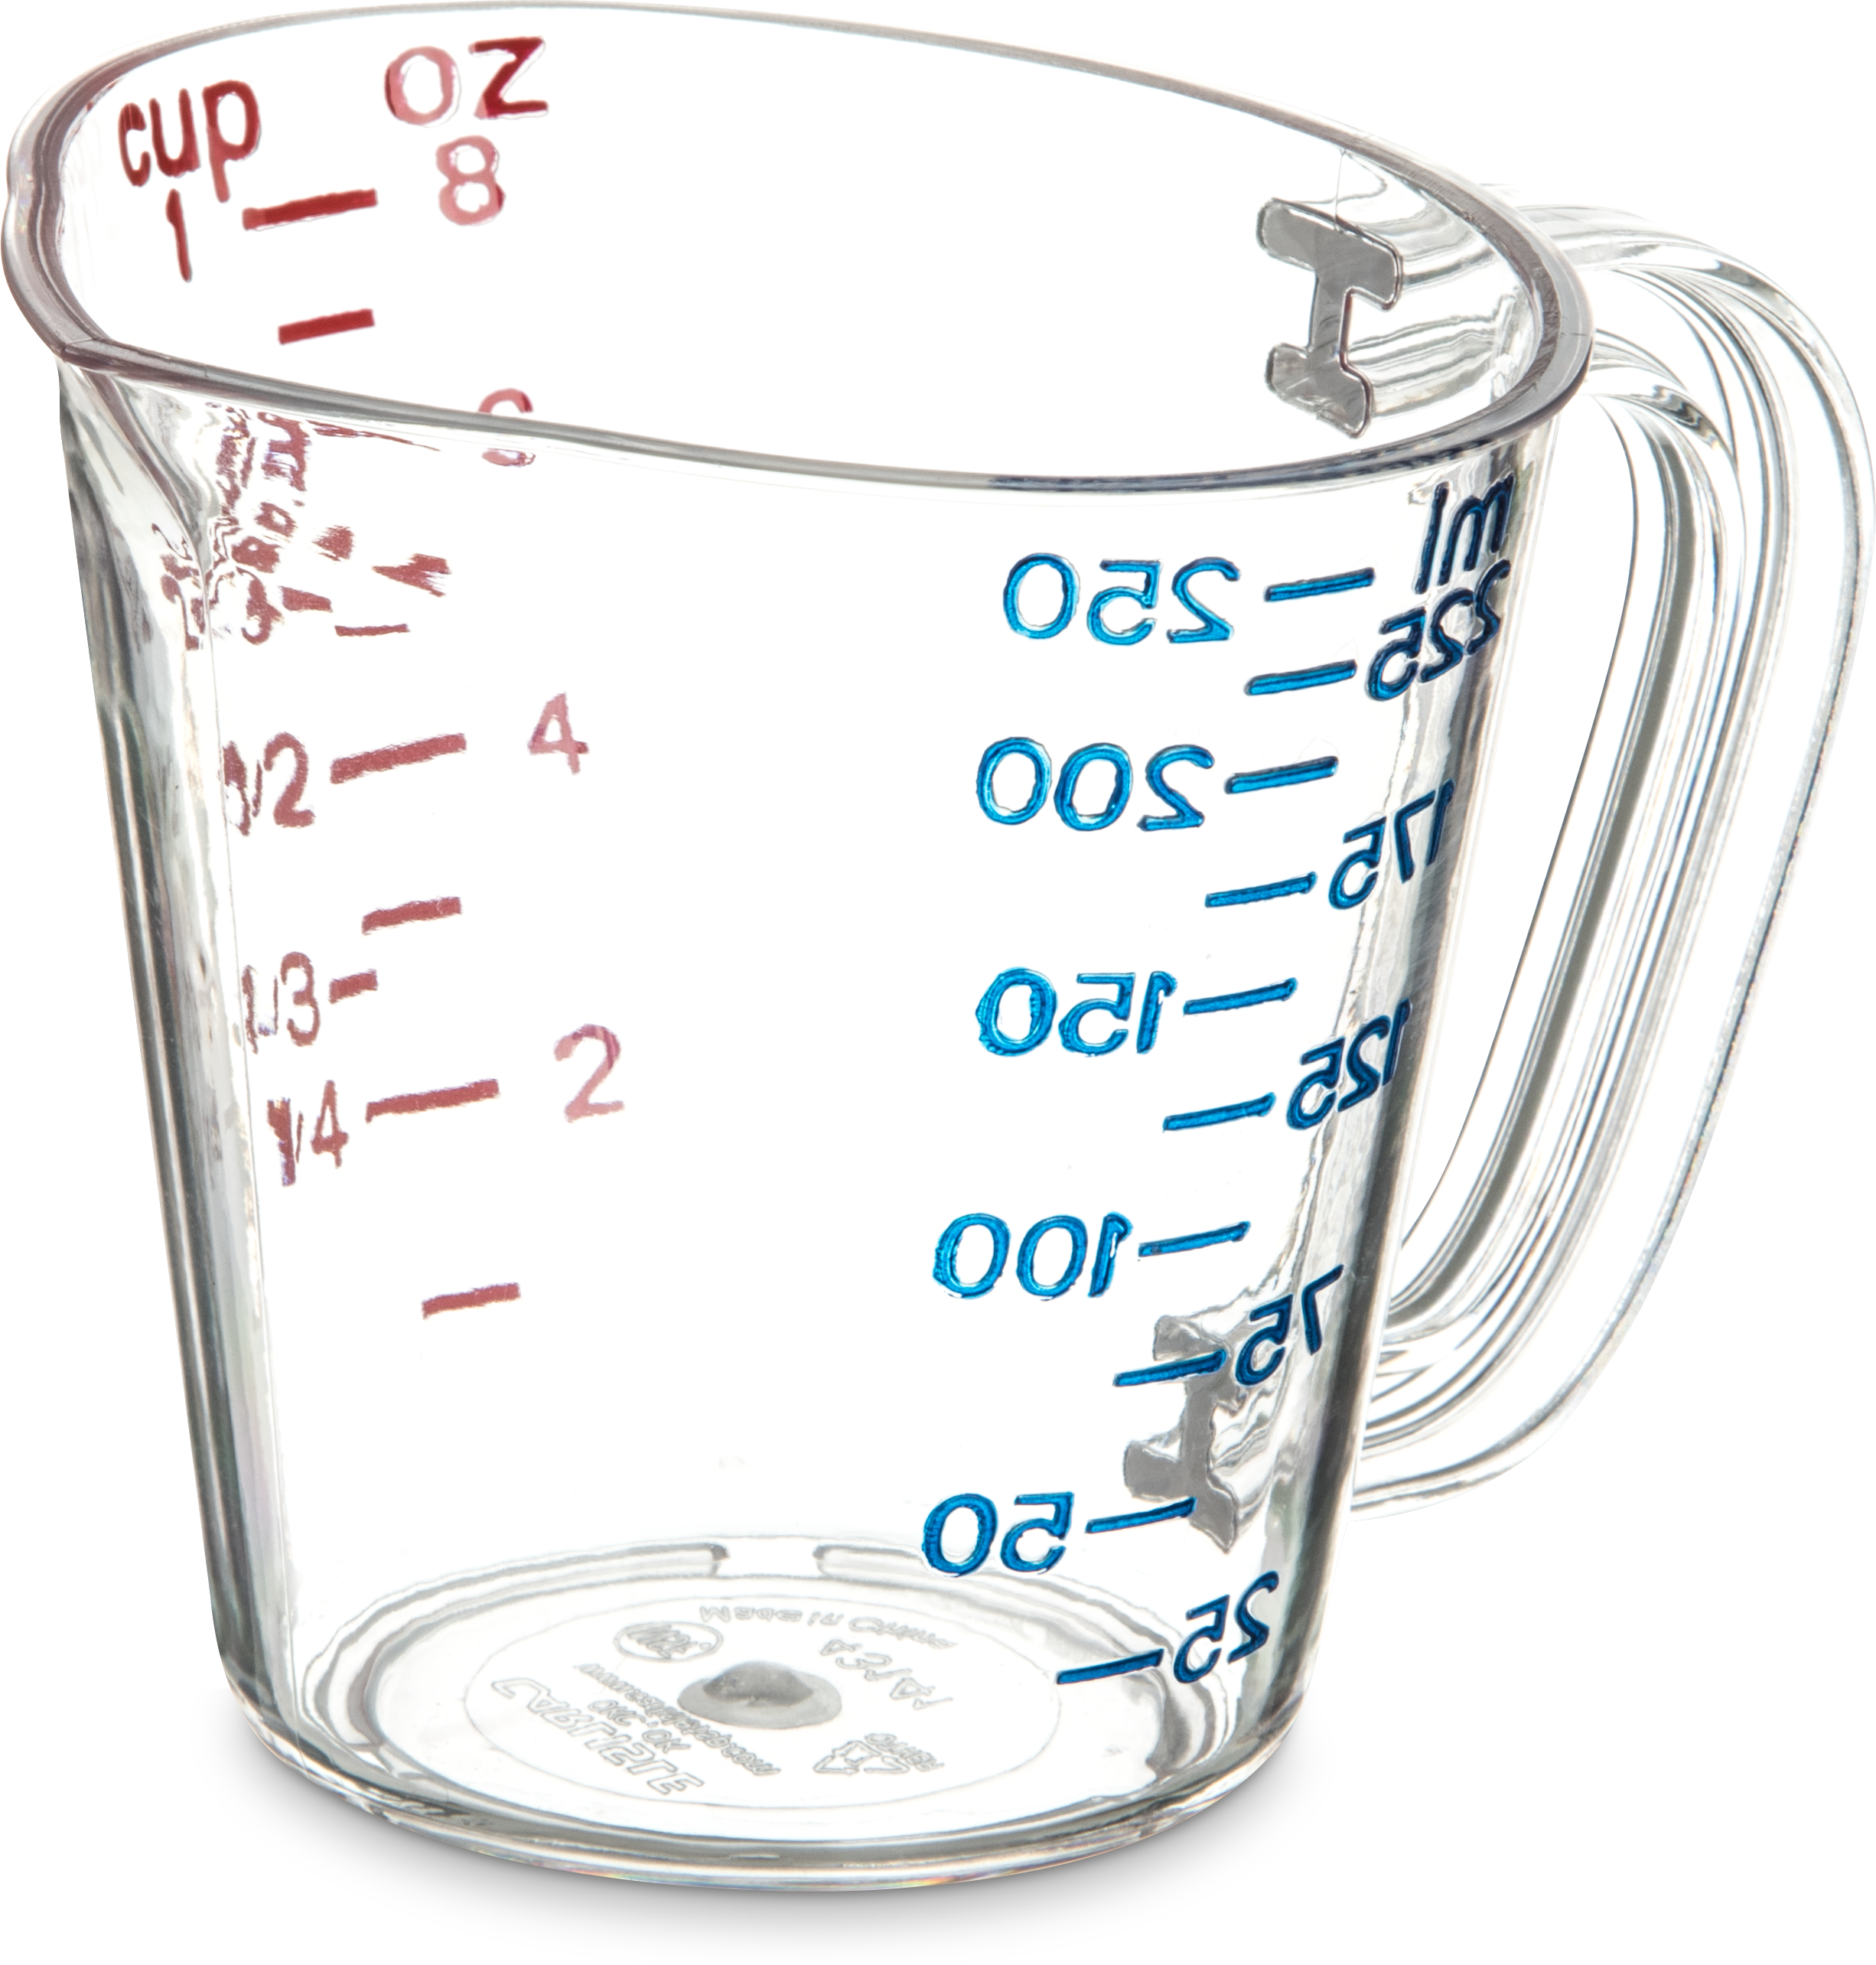 Commercial Measuring Cups - 4 Quart S-24379 - Uline